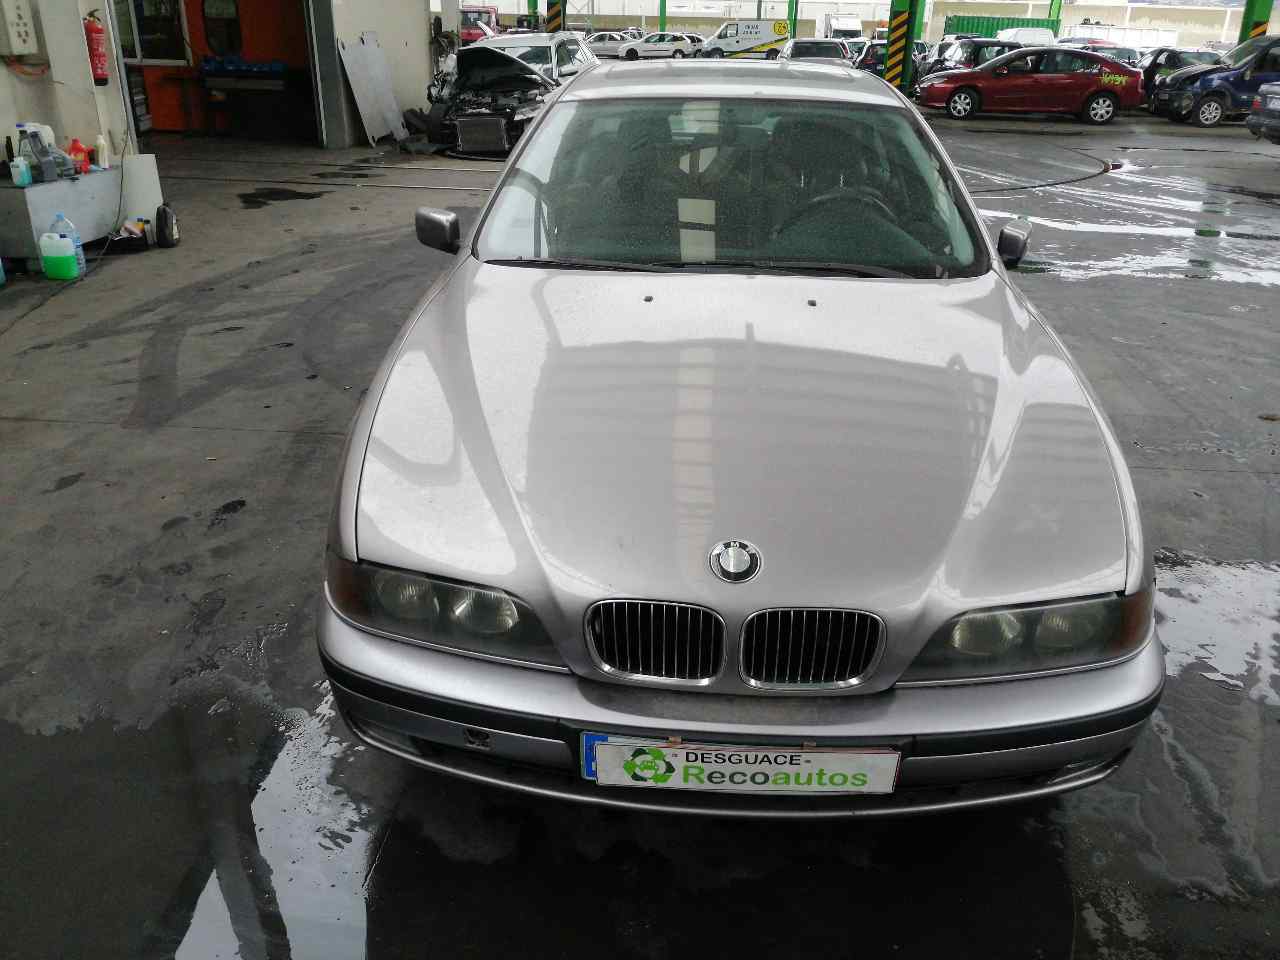 BMW 5 Series E39 (1995-2004) Rear Left Taillight 63216900209, 4PUERTAS 19845171